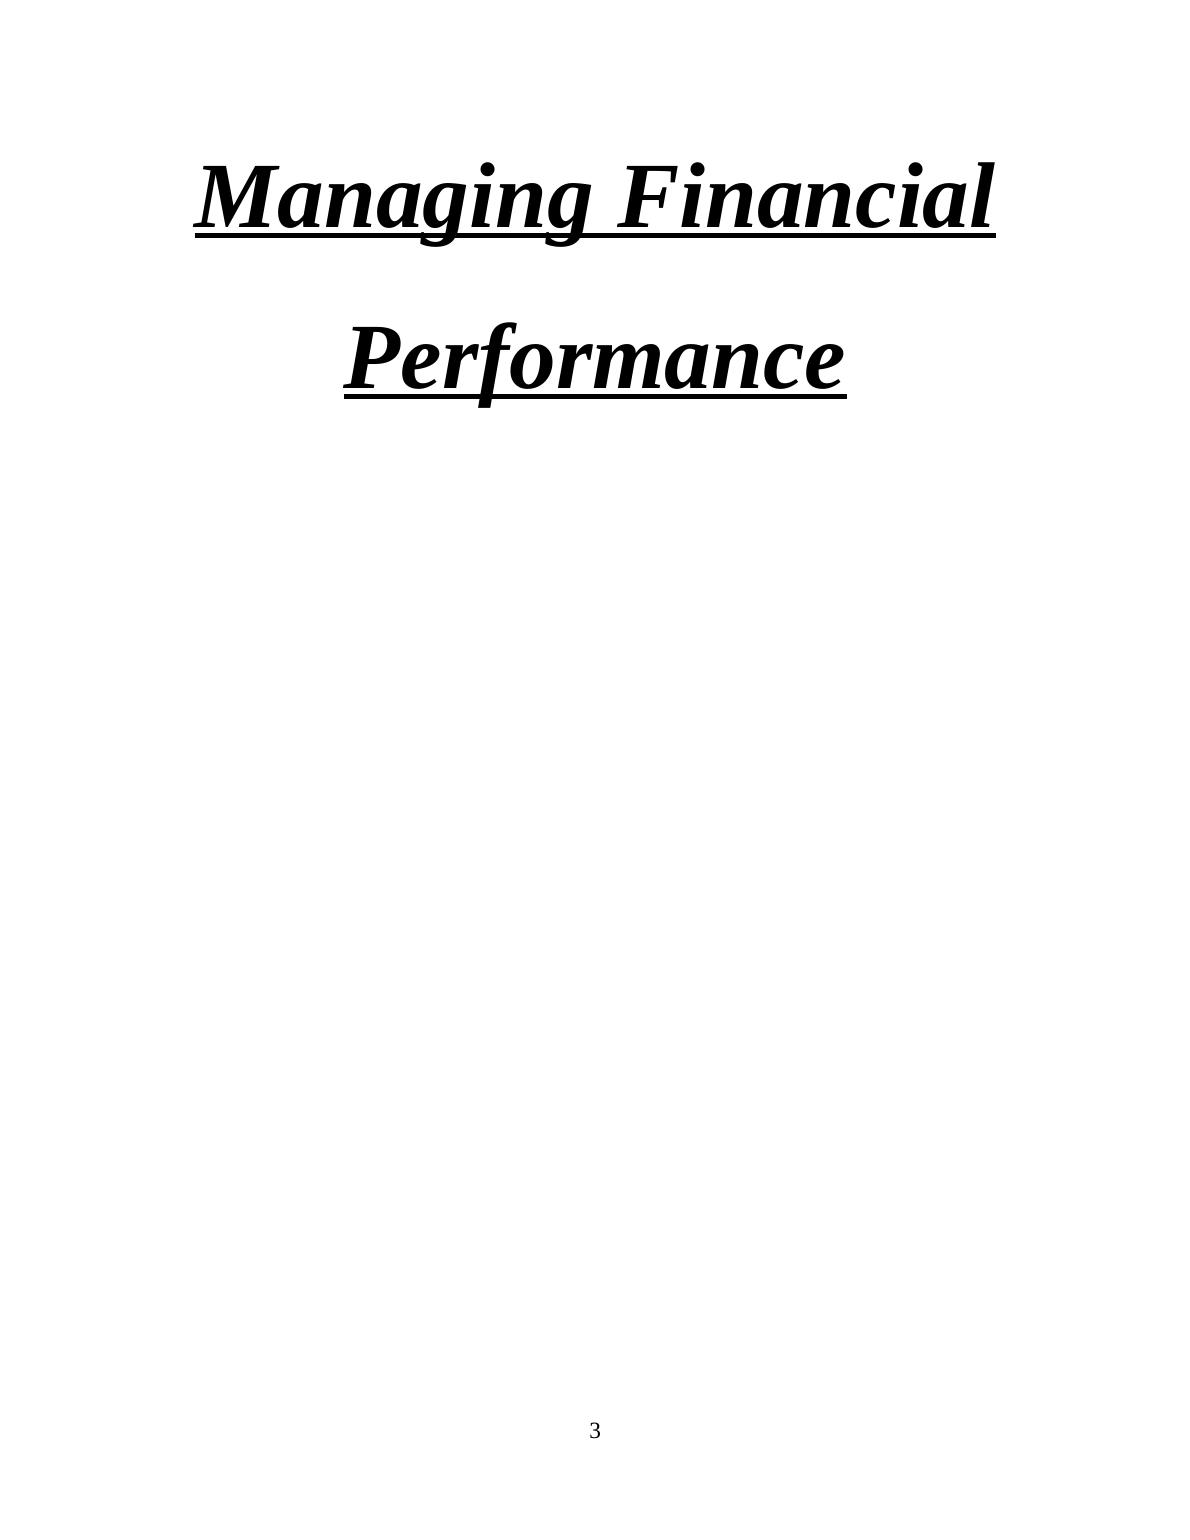 Managing Financial Performance_3